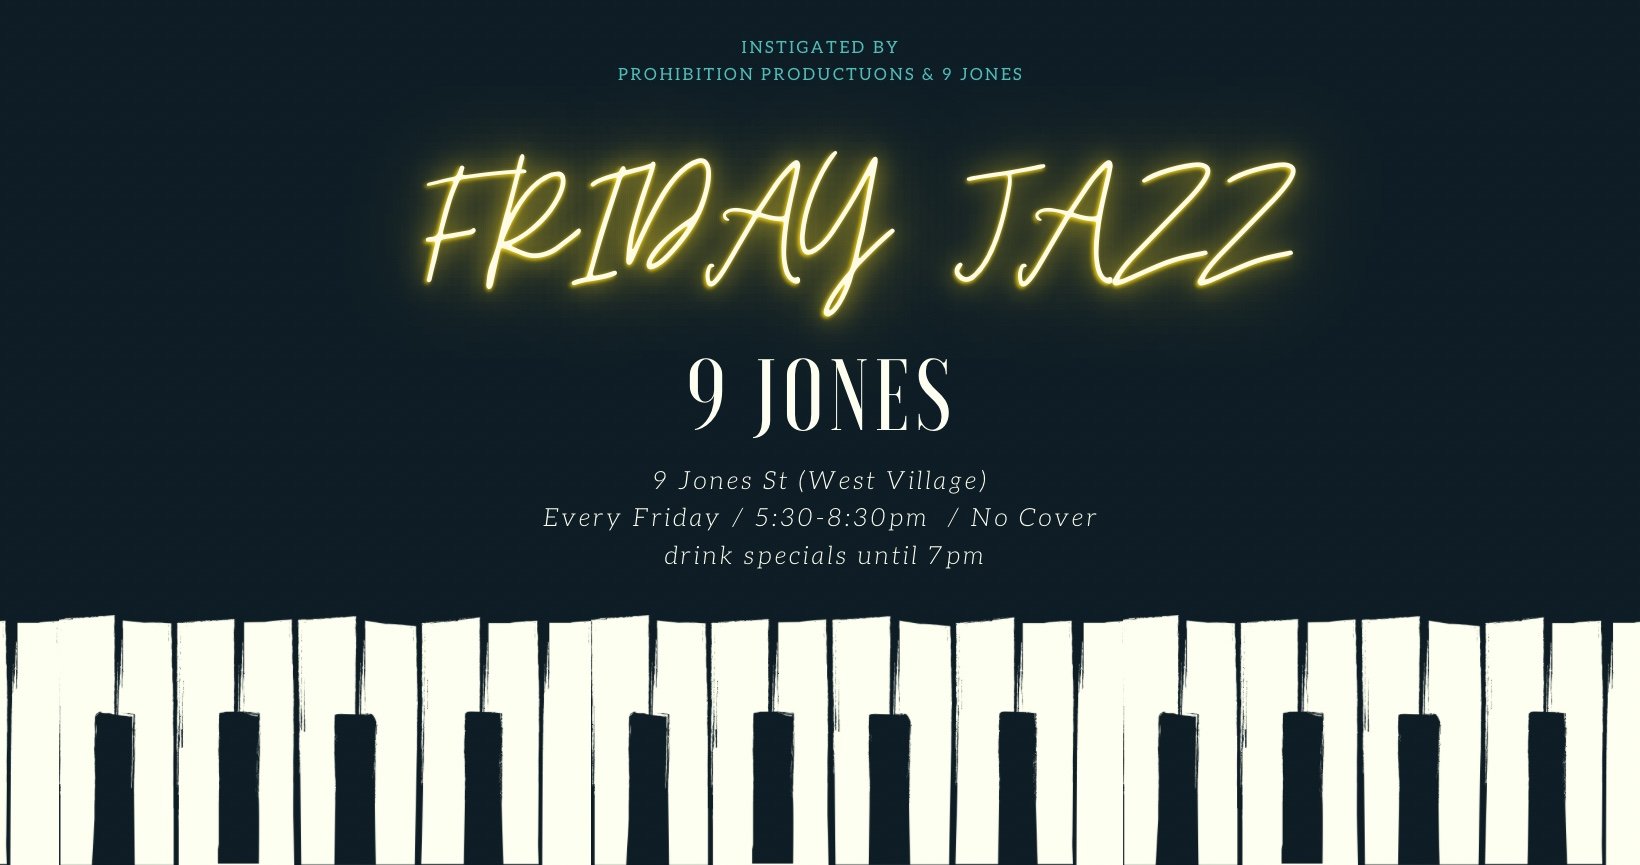 PROMO wide - 9 Jones jazz Friday (generic).jpg